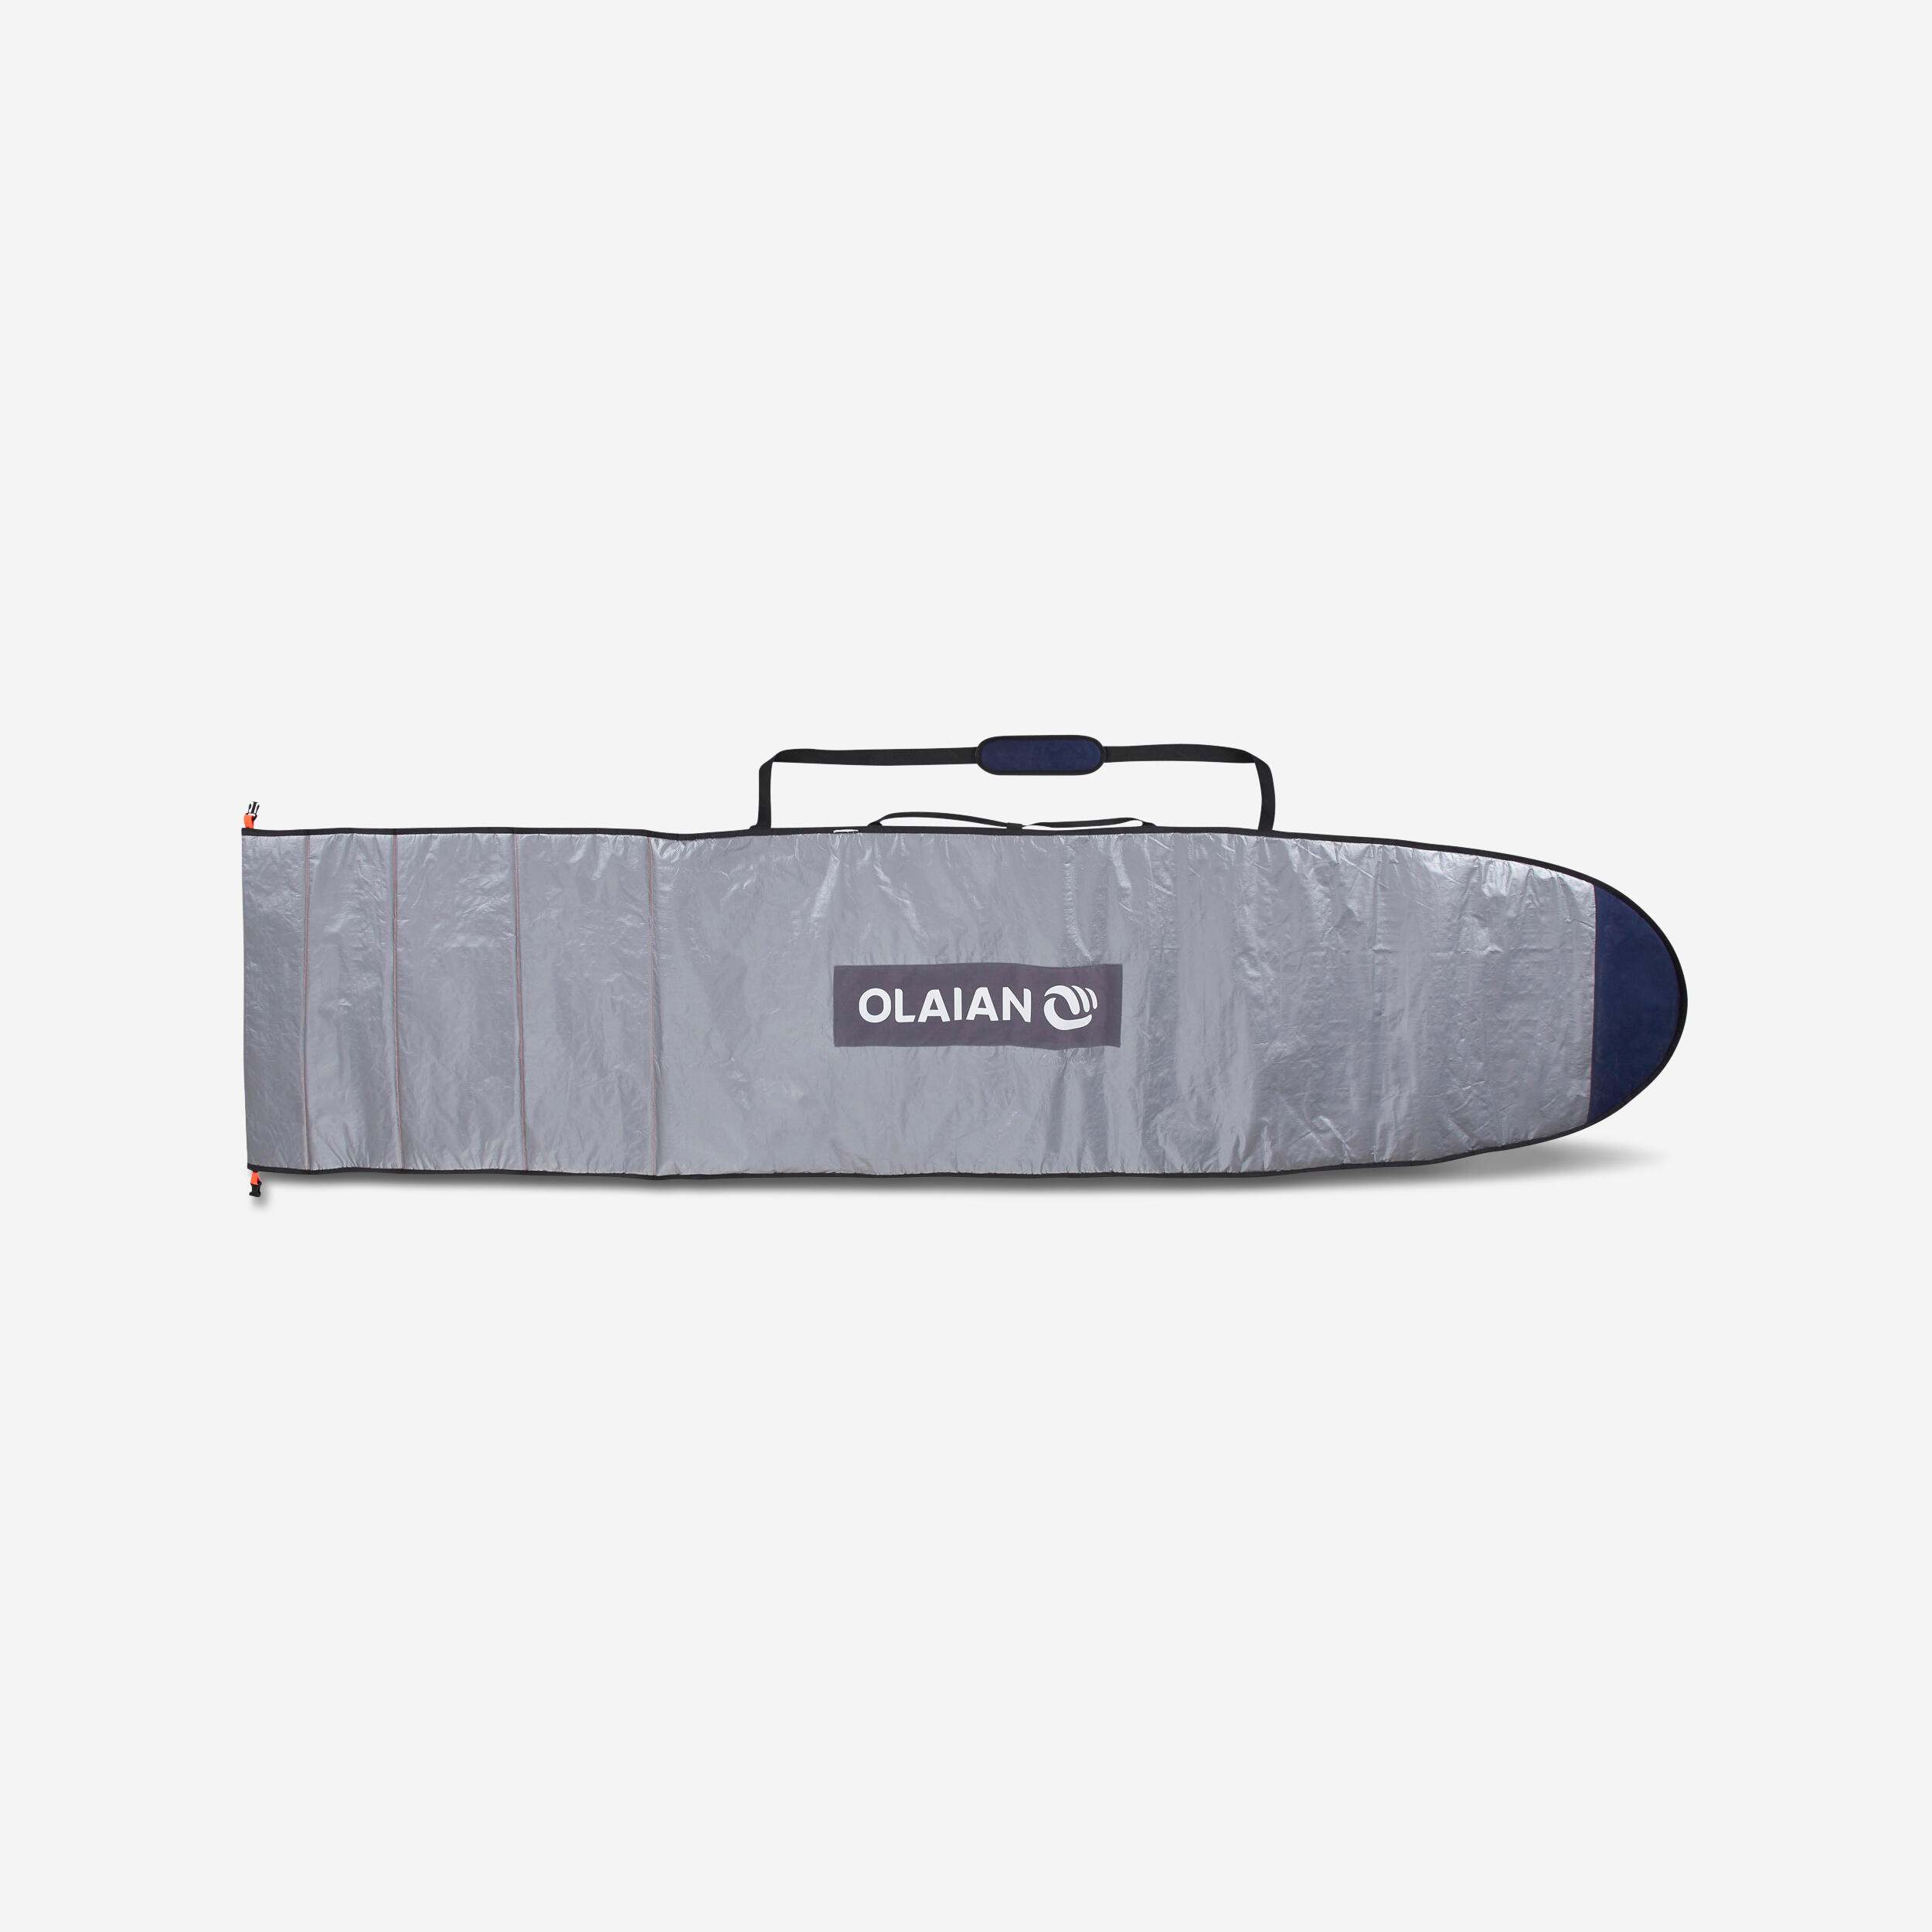 OLAIAN Boardbag Surfboard verstellbar 7'3–9'4 grau EINHEITSGRÖSSE